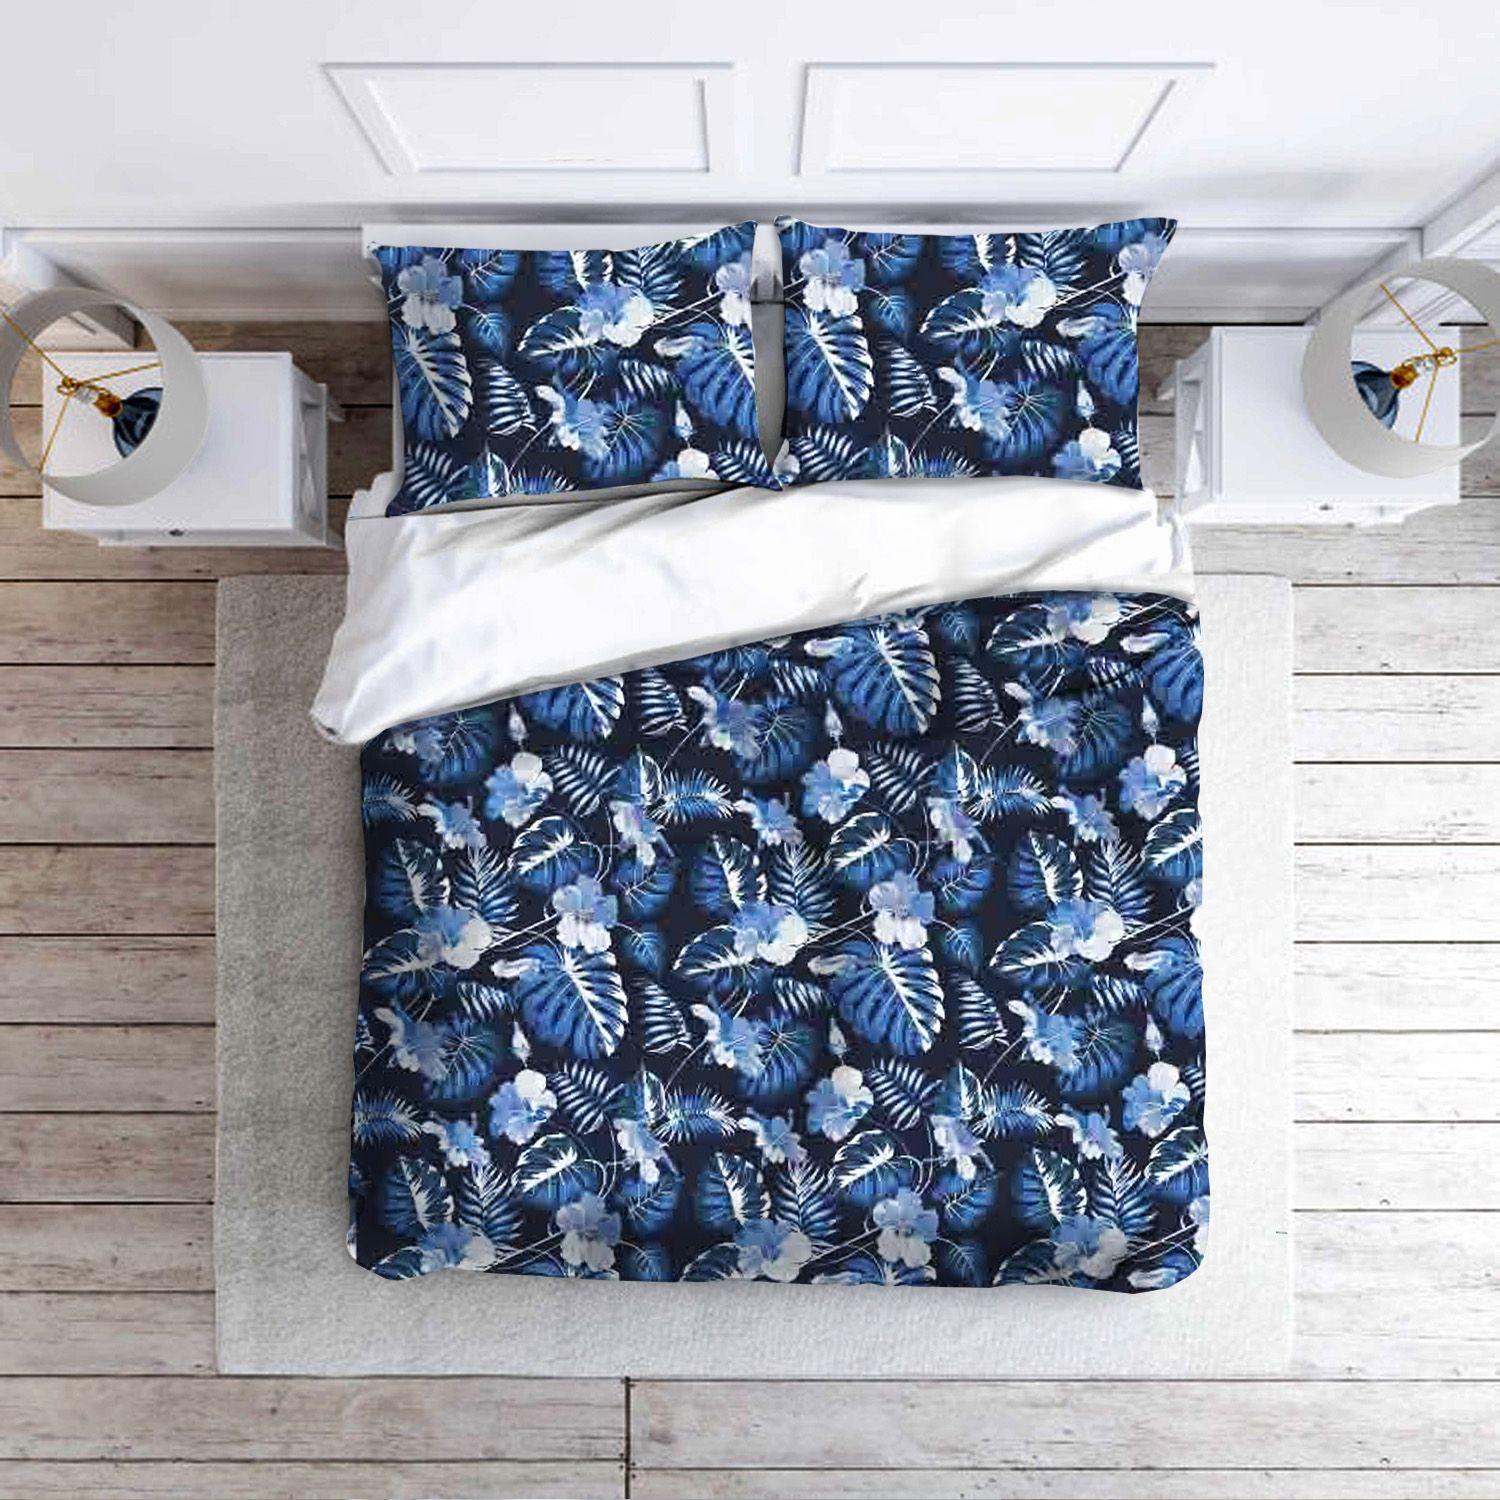 Cotton bed linen set 160x200 cm - navy blue monstery